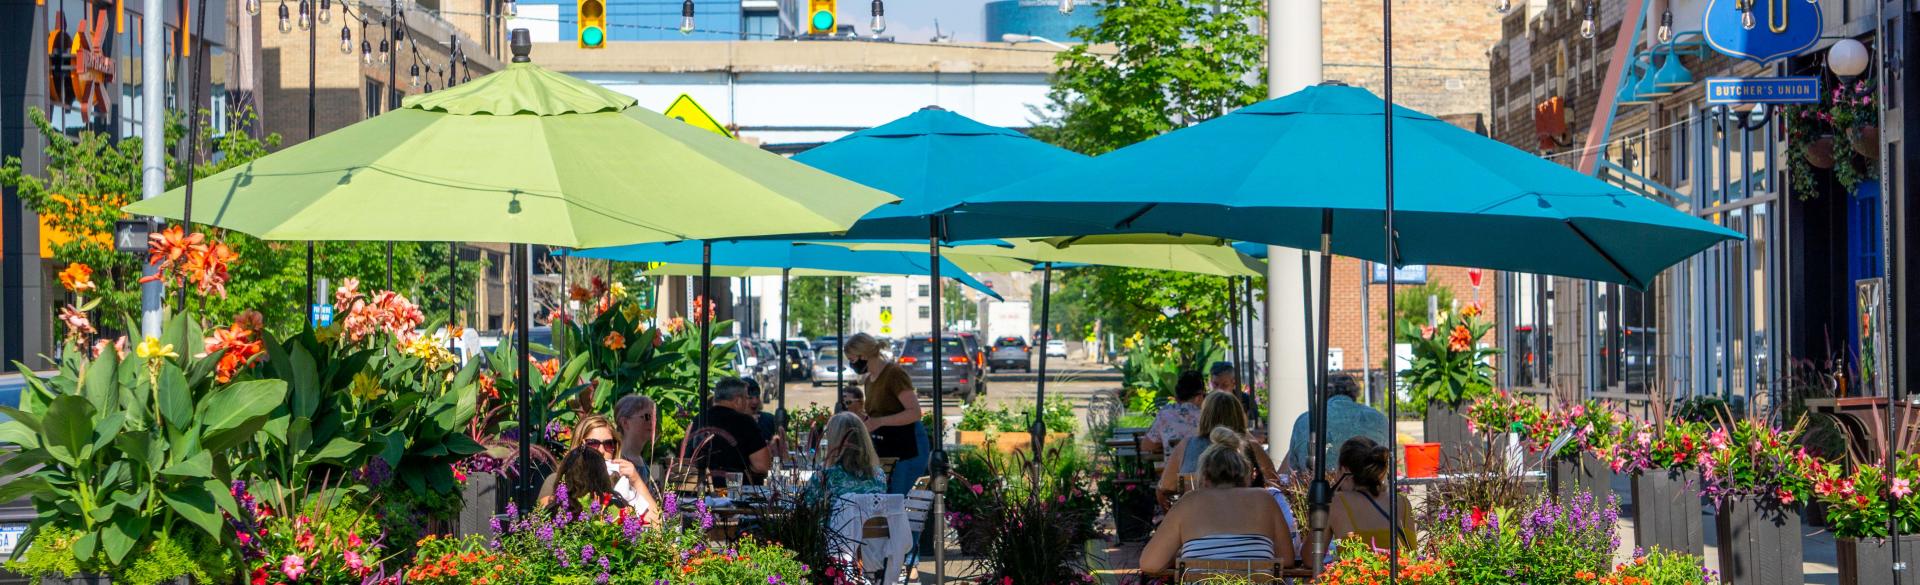 Bridge Street Social Zone for outdoor dining.